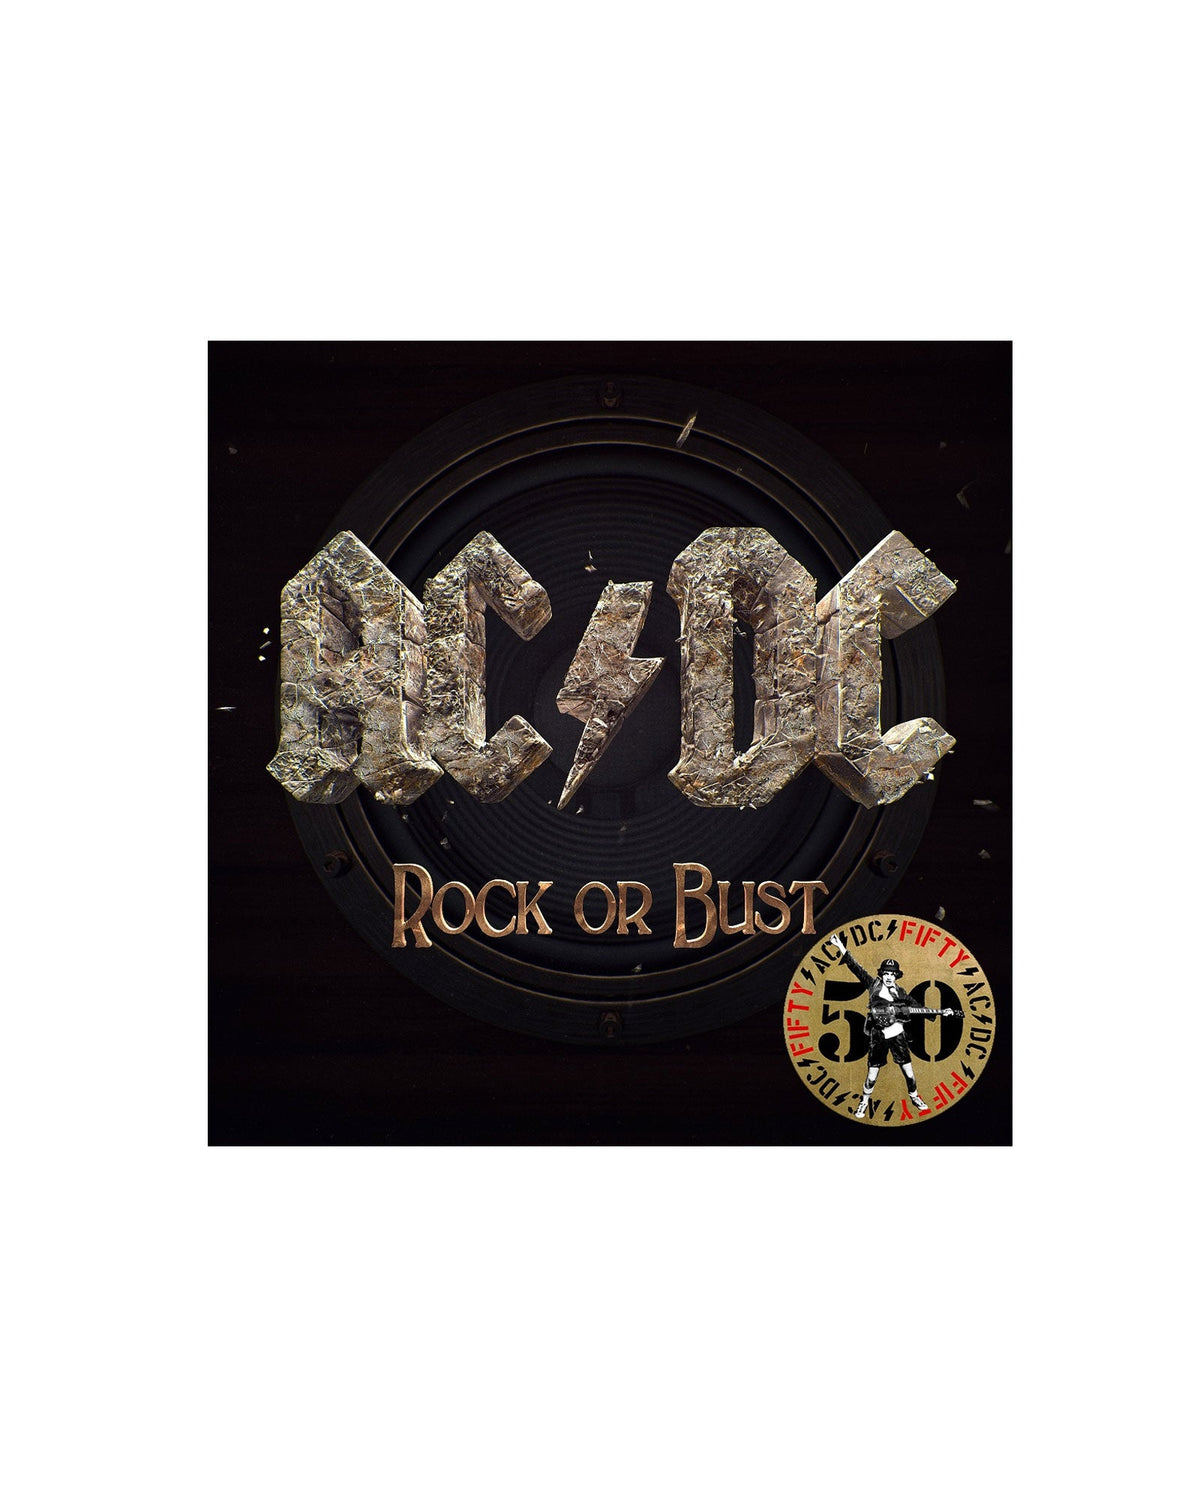 AC/DC - LP Vinilo Dorado "Rock or Bust" Ed. 50 aniversario - D2fy · Rocktud - Rocktud